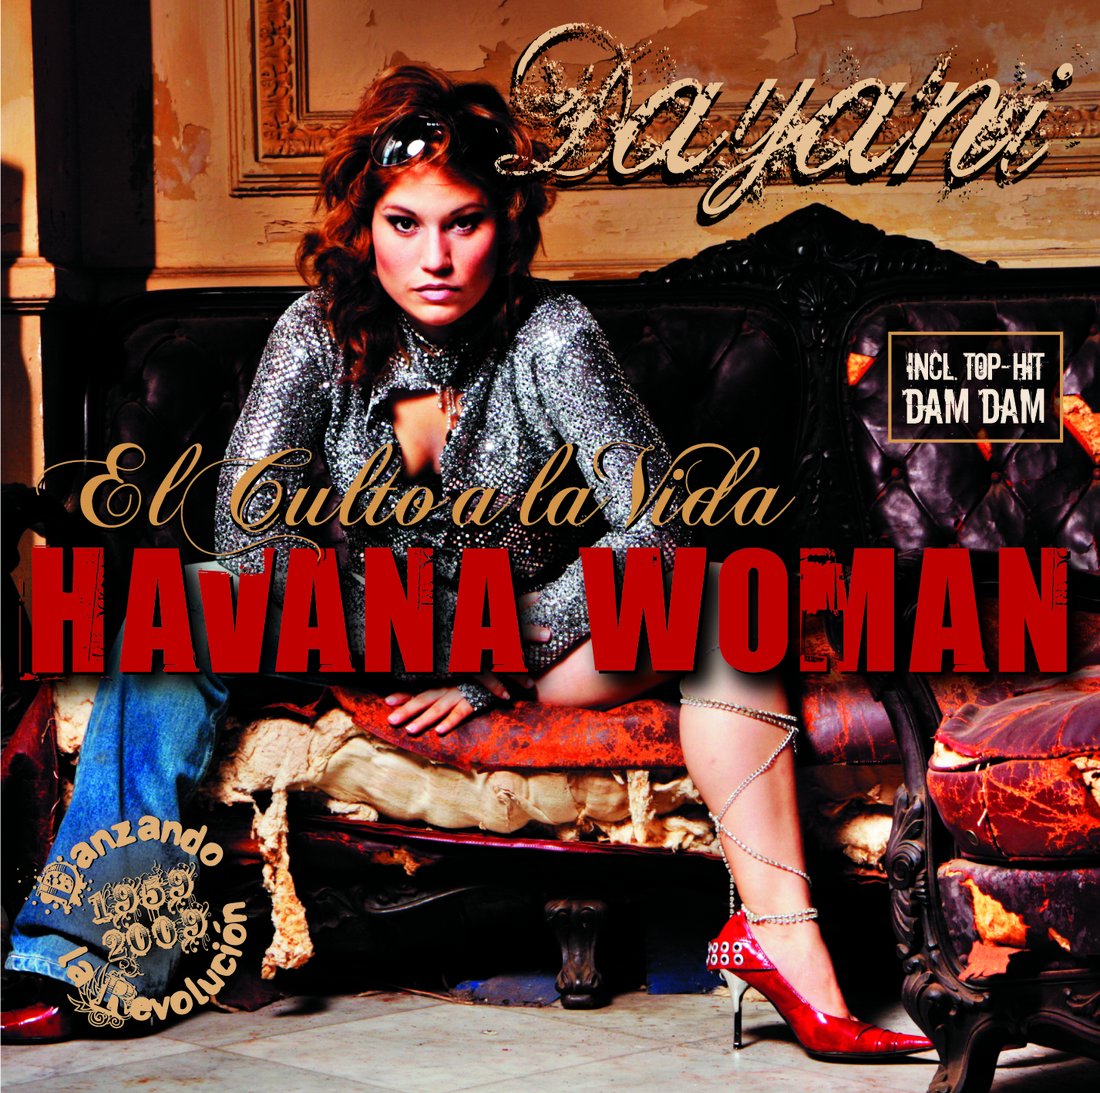 Havana Woman CD-Cover Titel